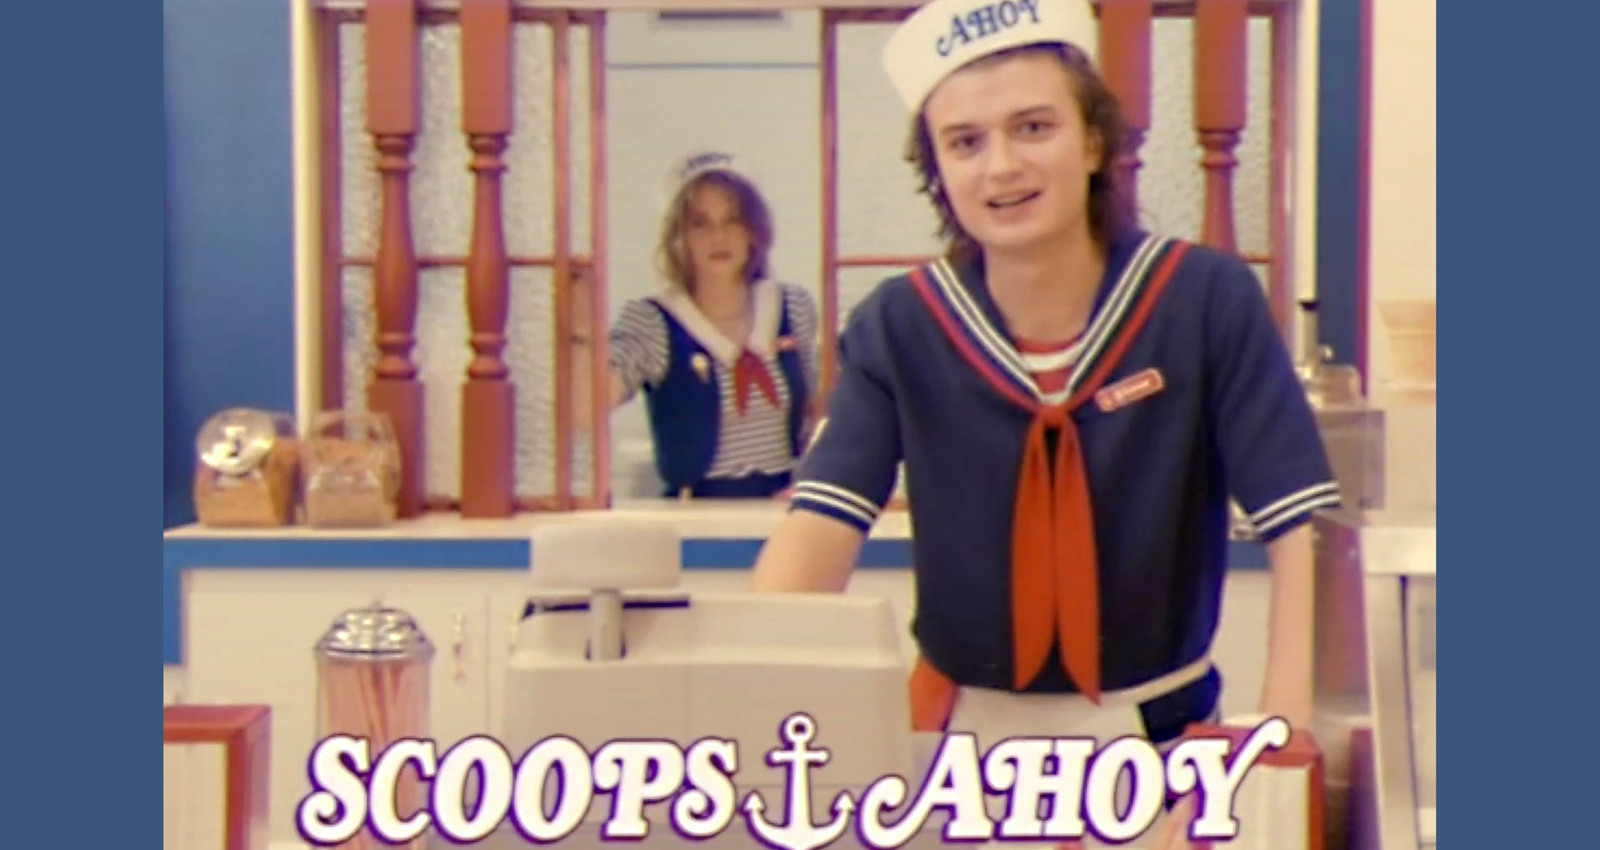 Scoops Ahoy: Operation Scoop Snoop